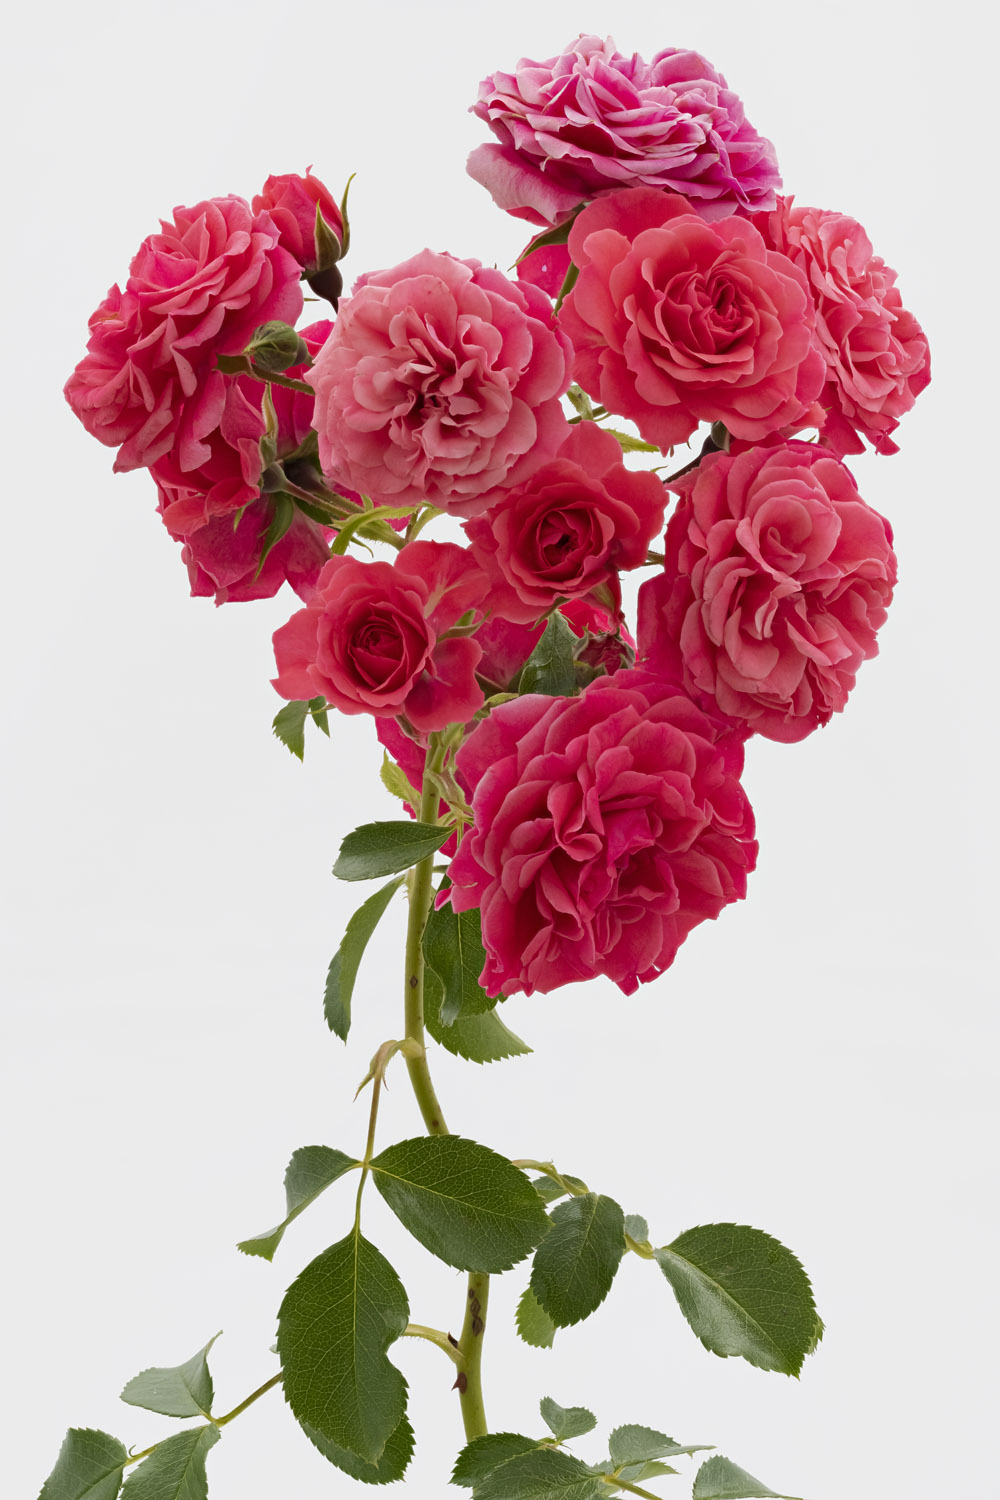 Pierre Joseph pierre joseph/redoute/Choix Roses/ADAnirar-Happy Harmonie-ADAM.jpg